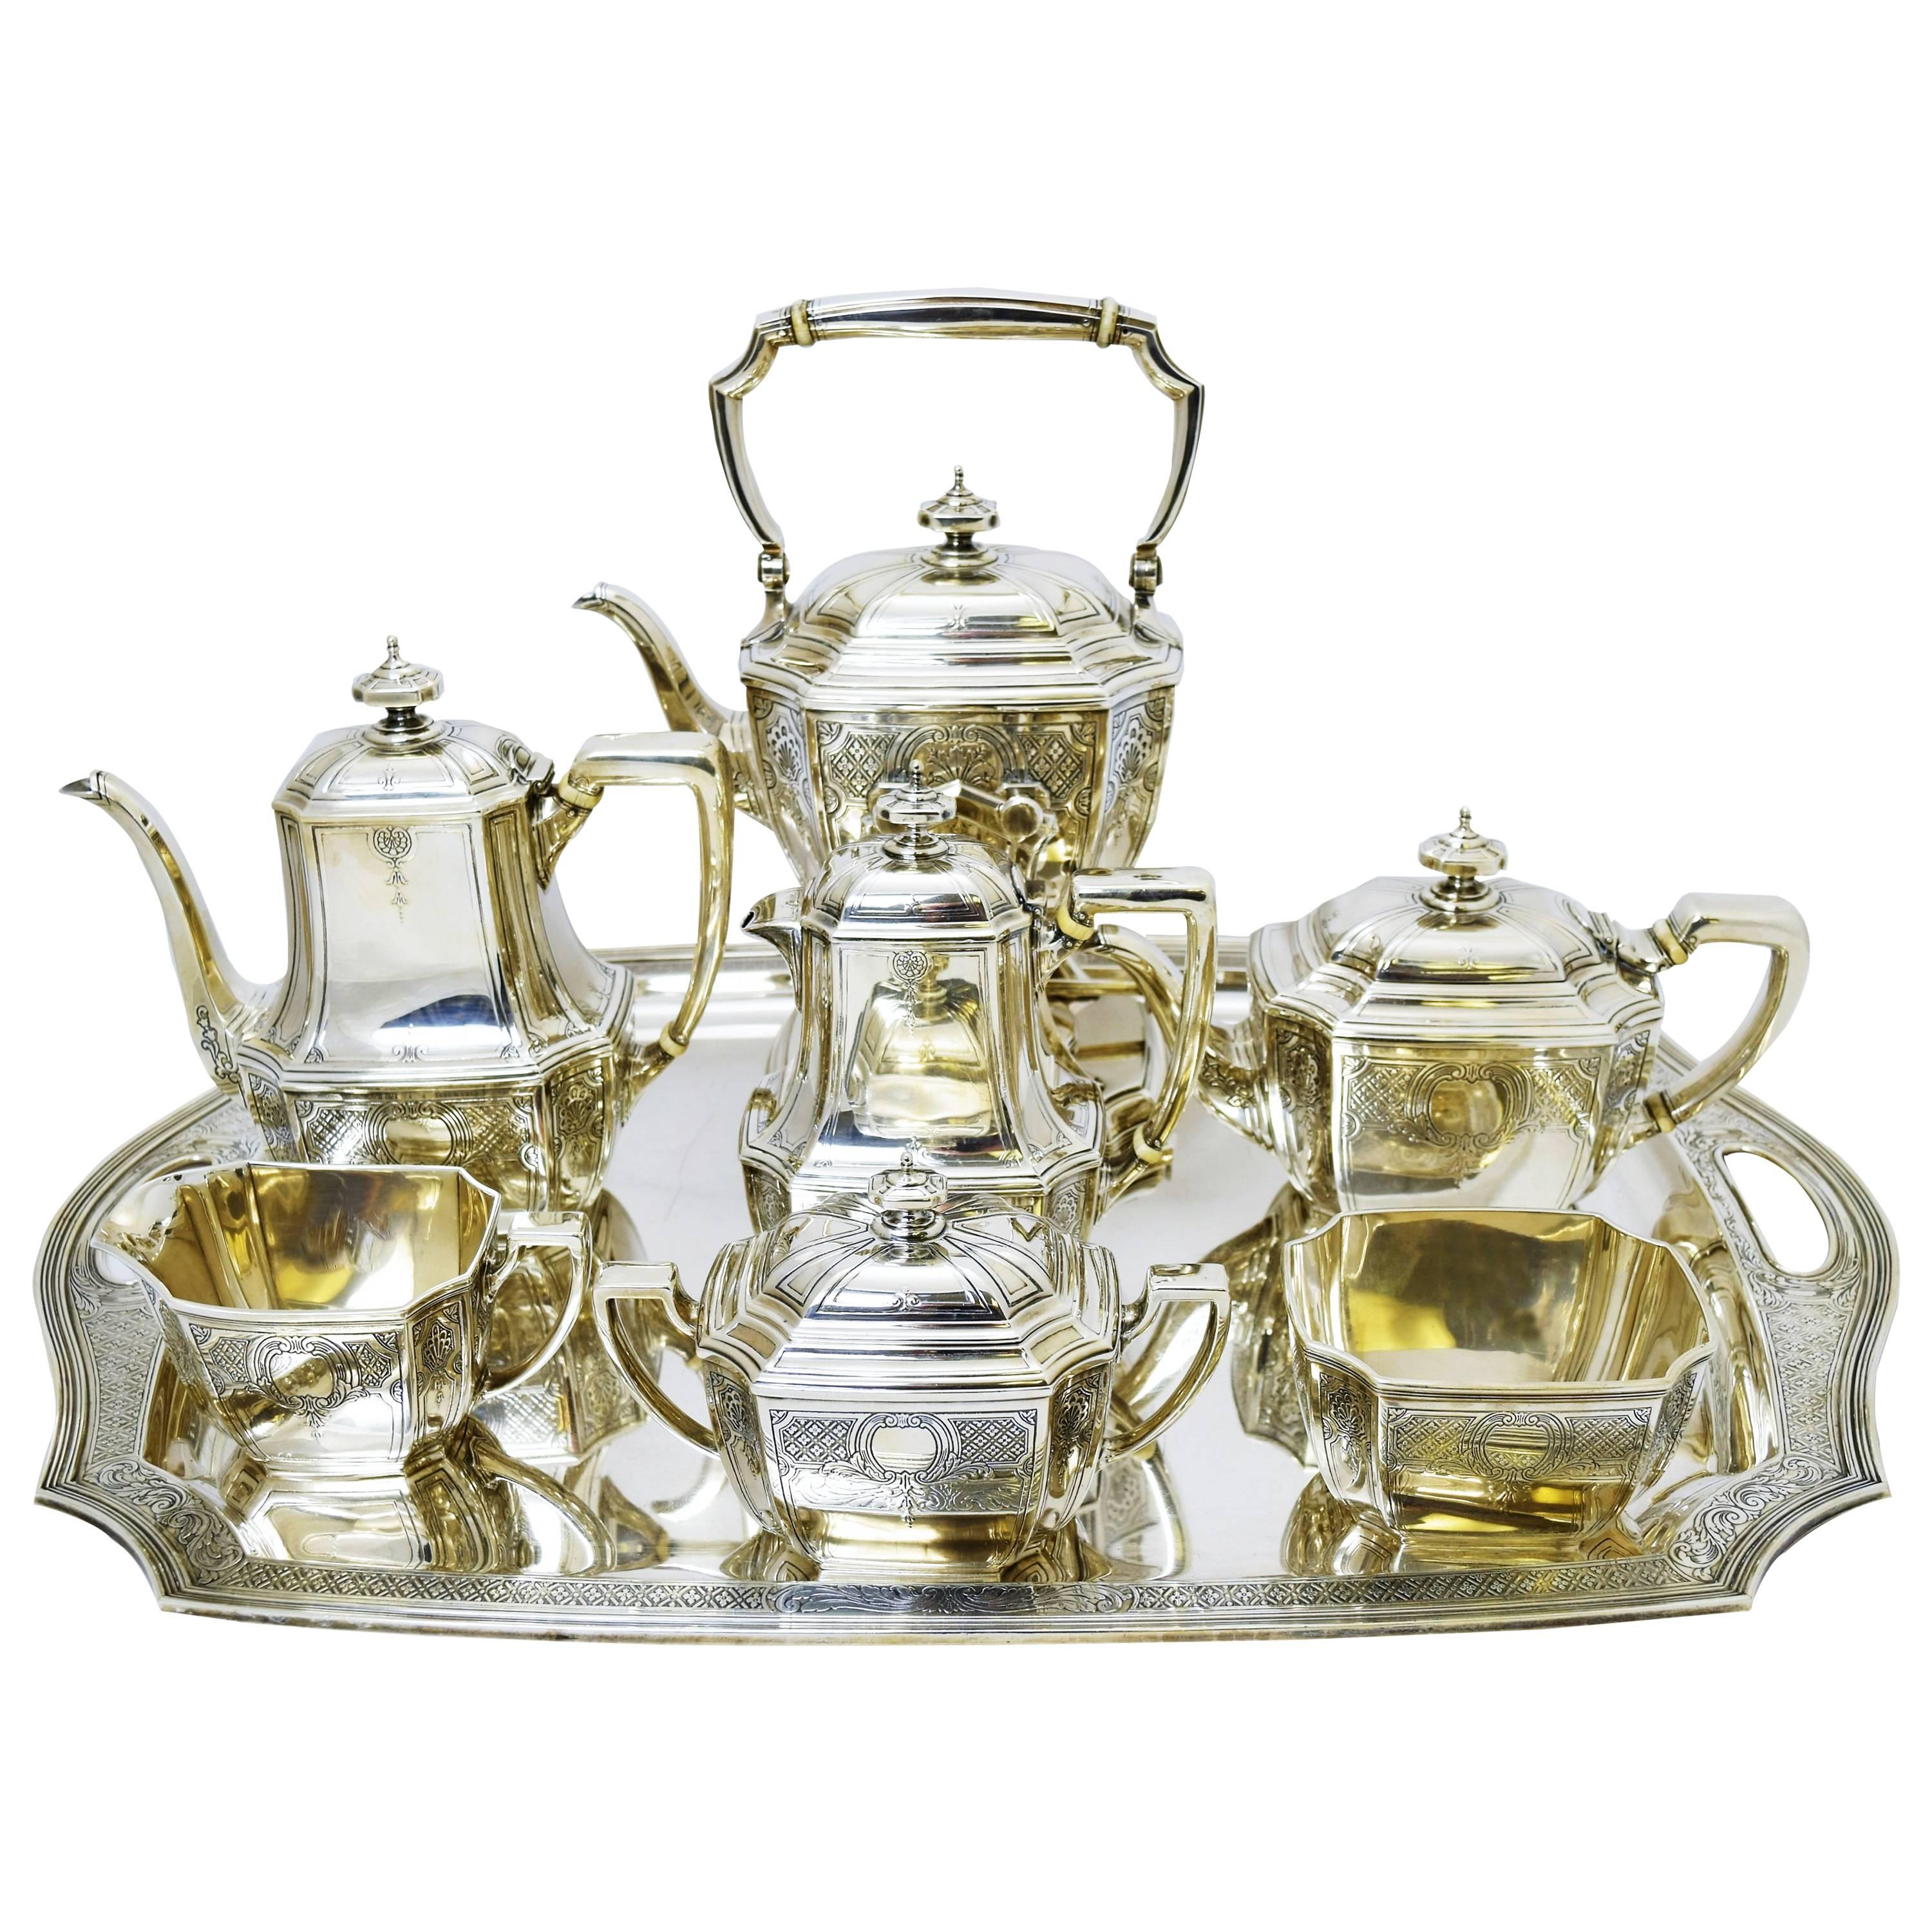 Tiffany & Co. Sterling Silver Tea and Coffee Set, circa 1915